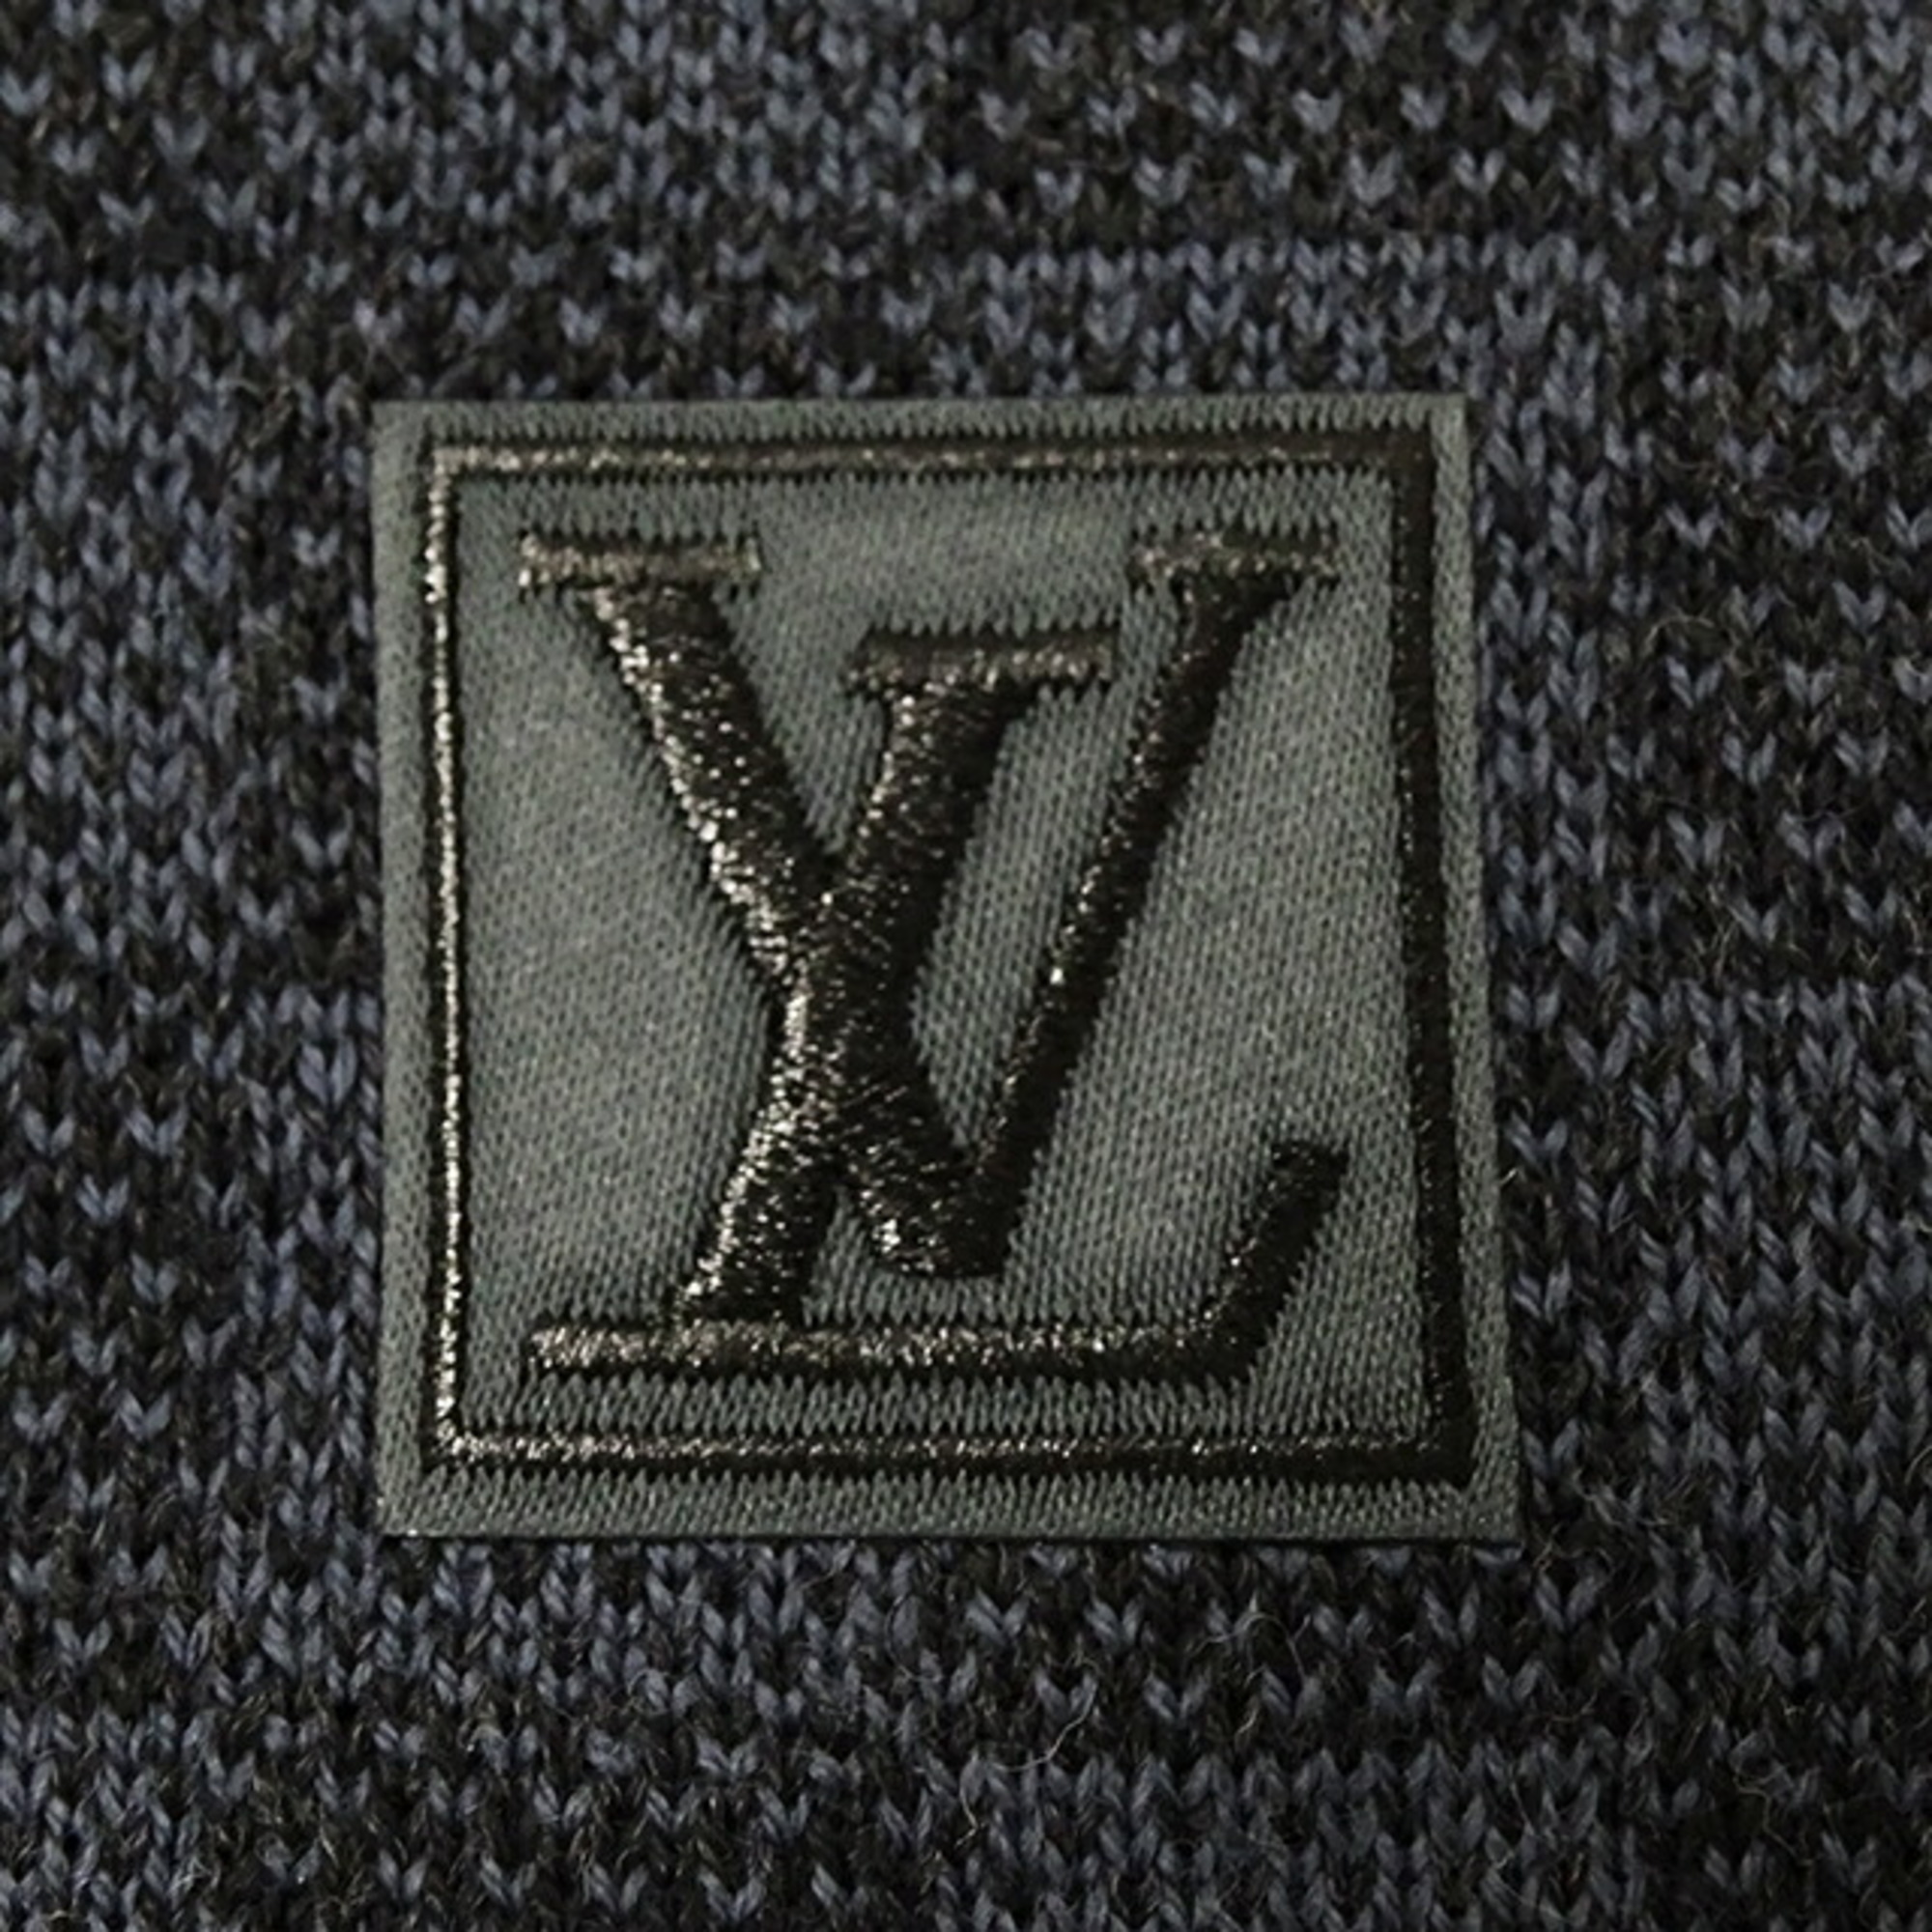 Louis Vuitton LOUIS VUITTON Scarf Men's Stole Wool Echarpe Petit Damier Navy Outing Blue Warm